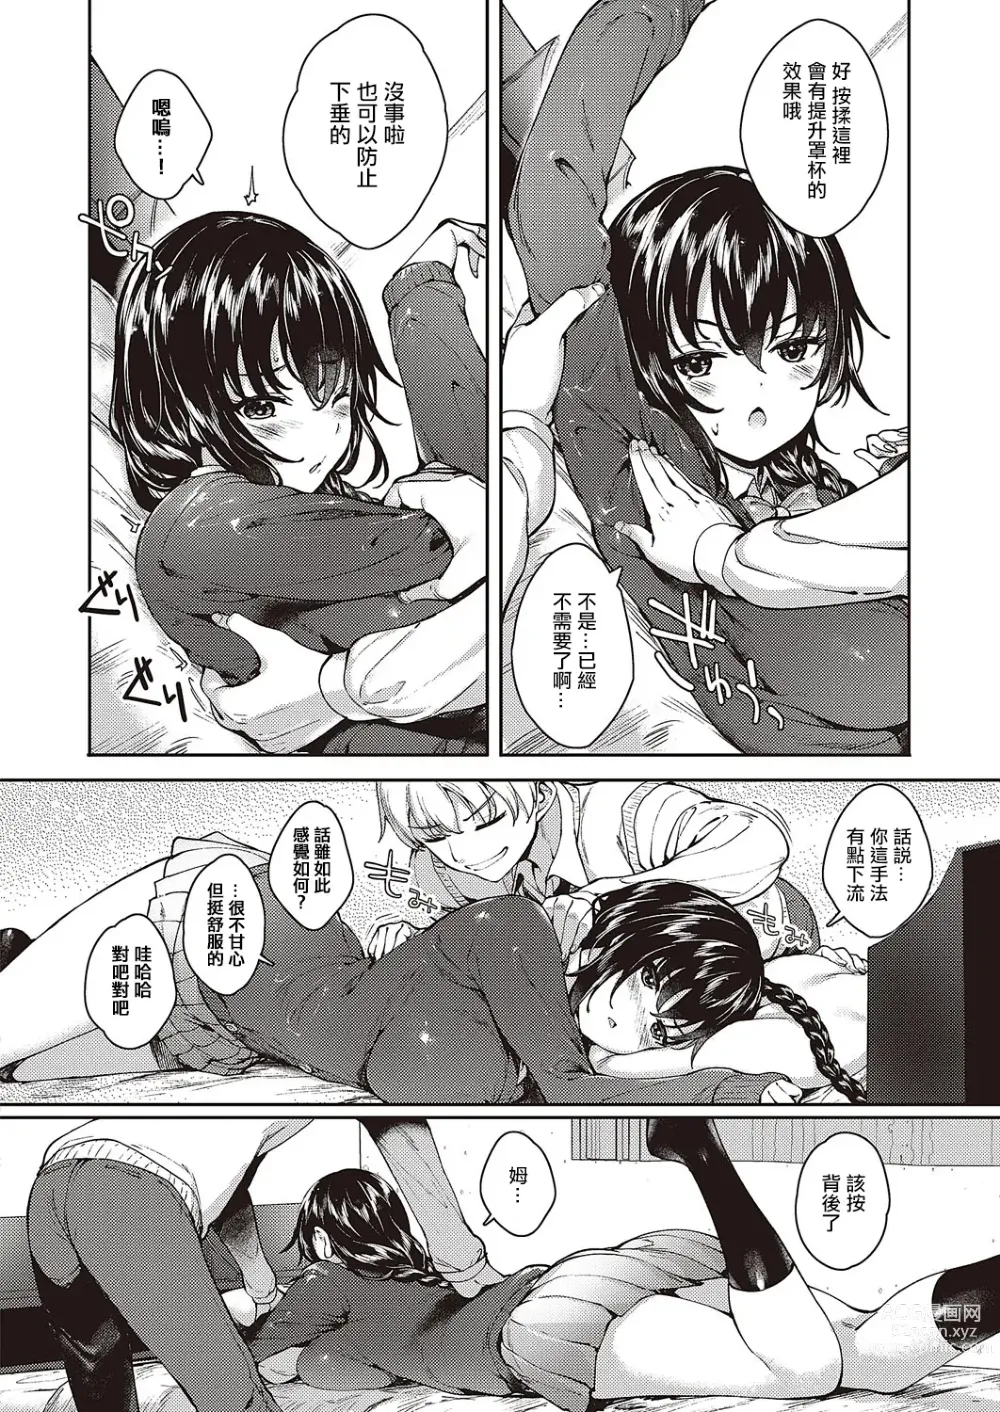 Page 14 of manga めぐりどころ 1歩